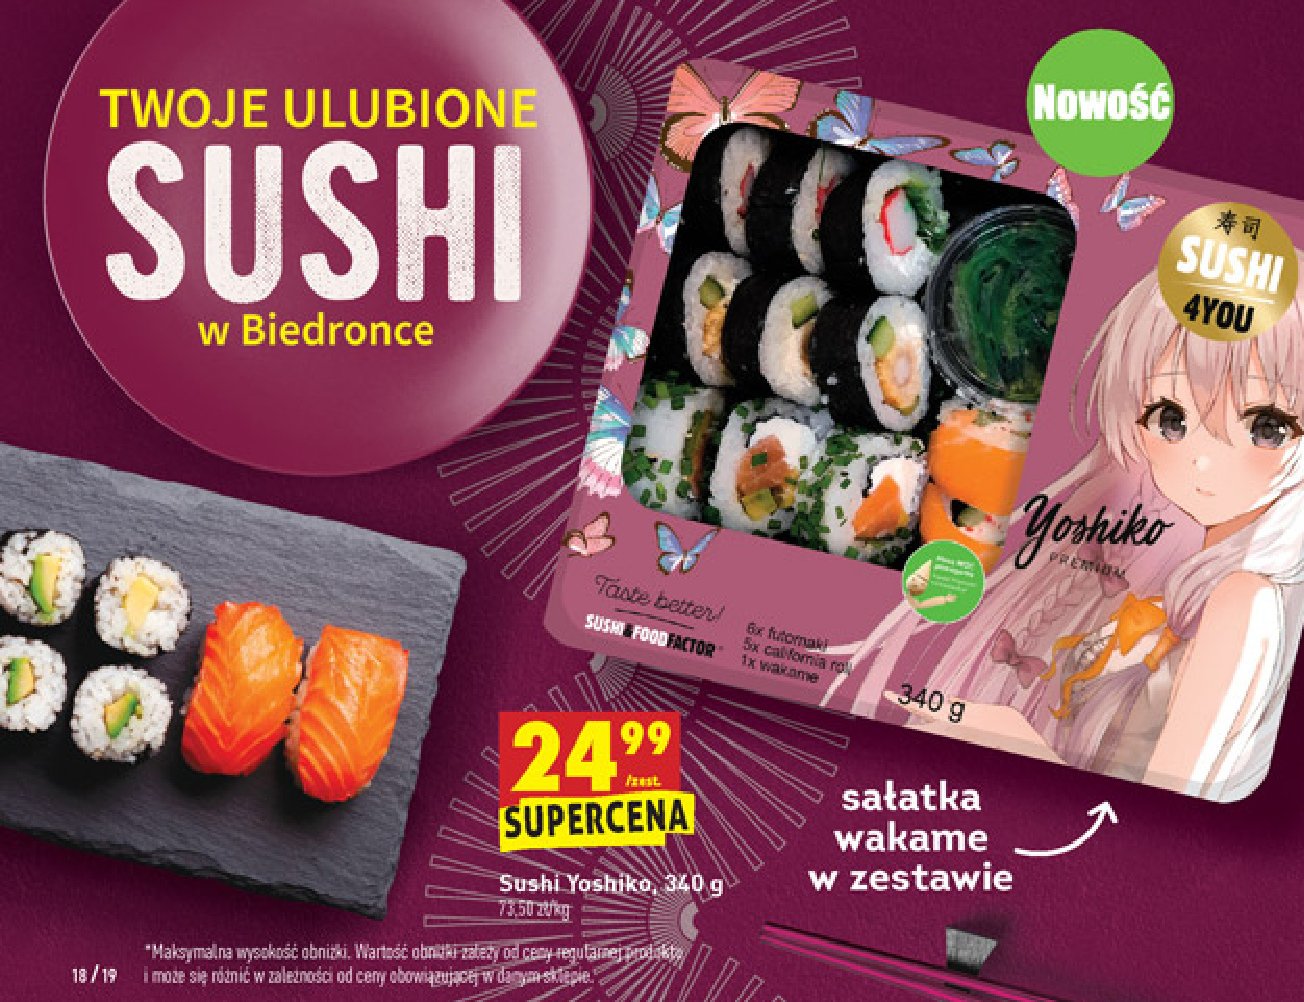 Sushi yoshiko Sushi 4you promocja